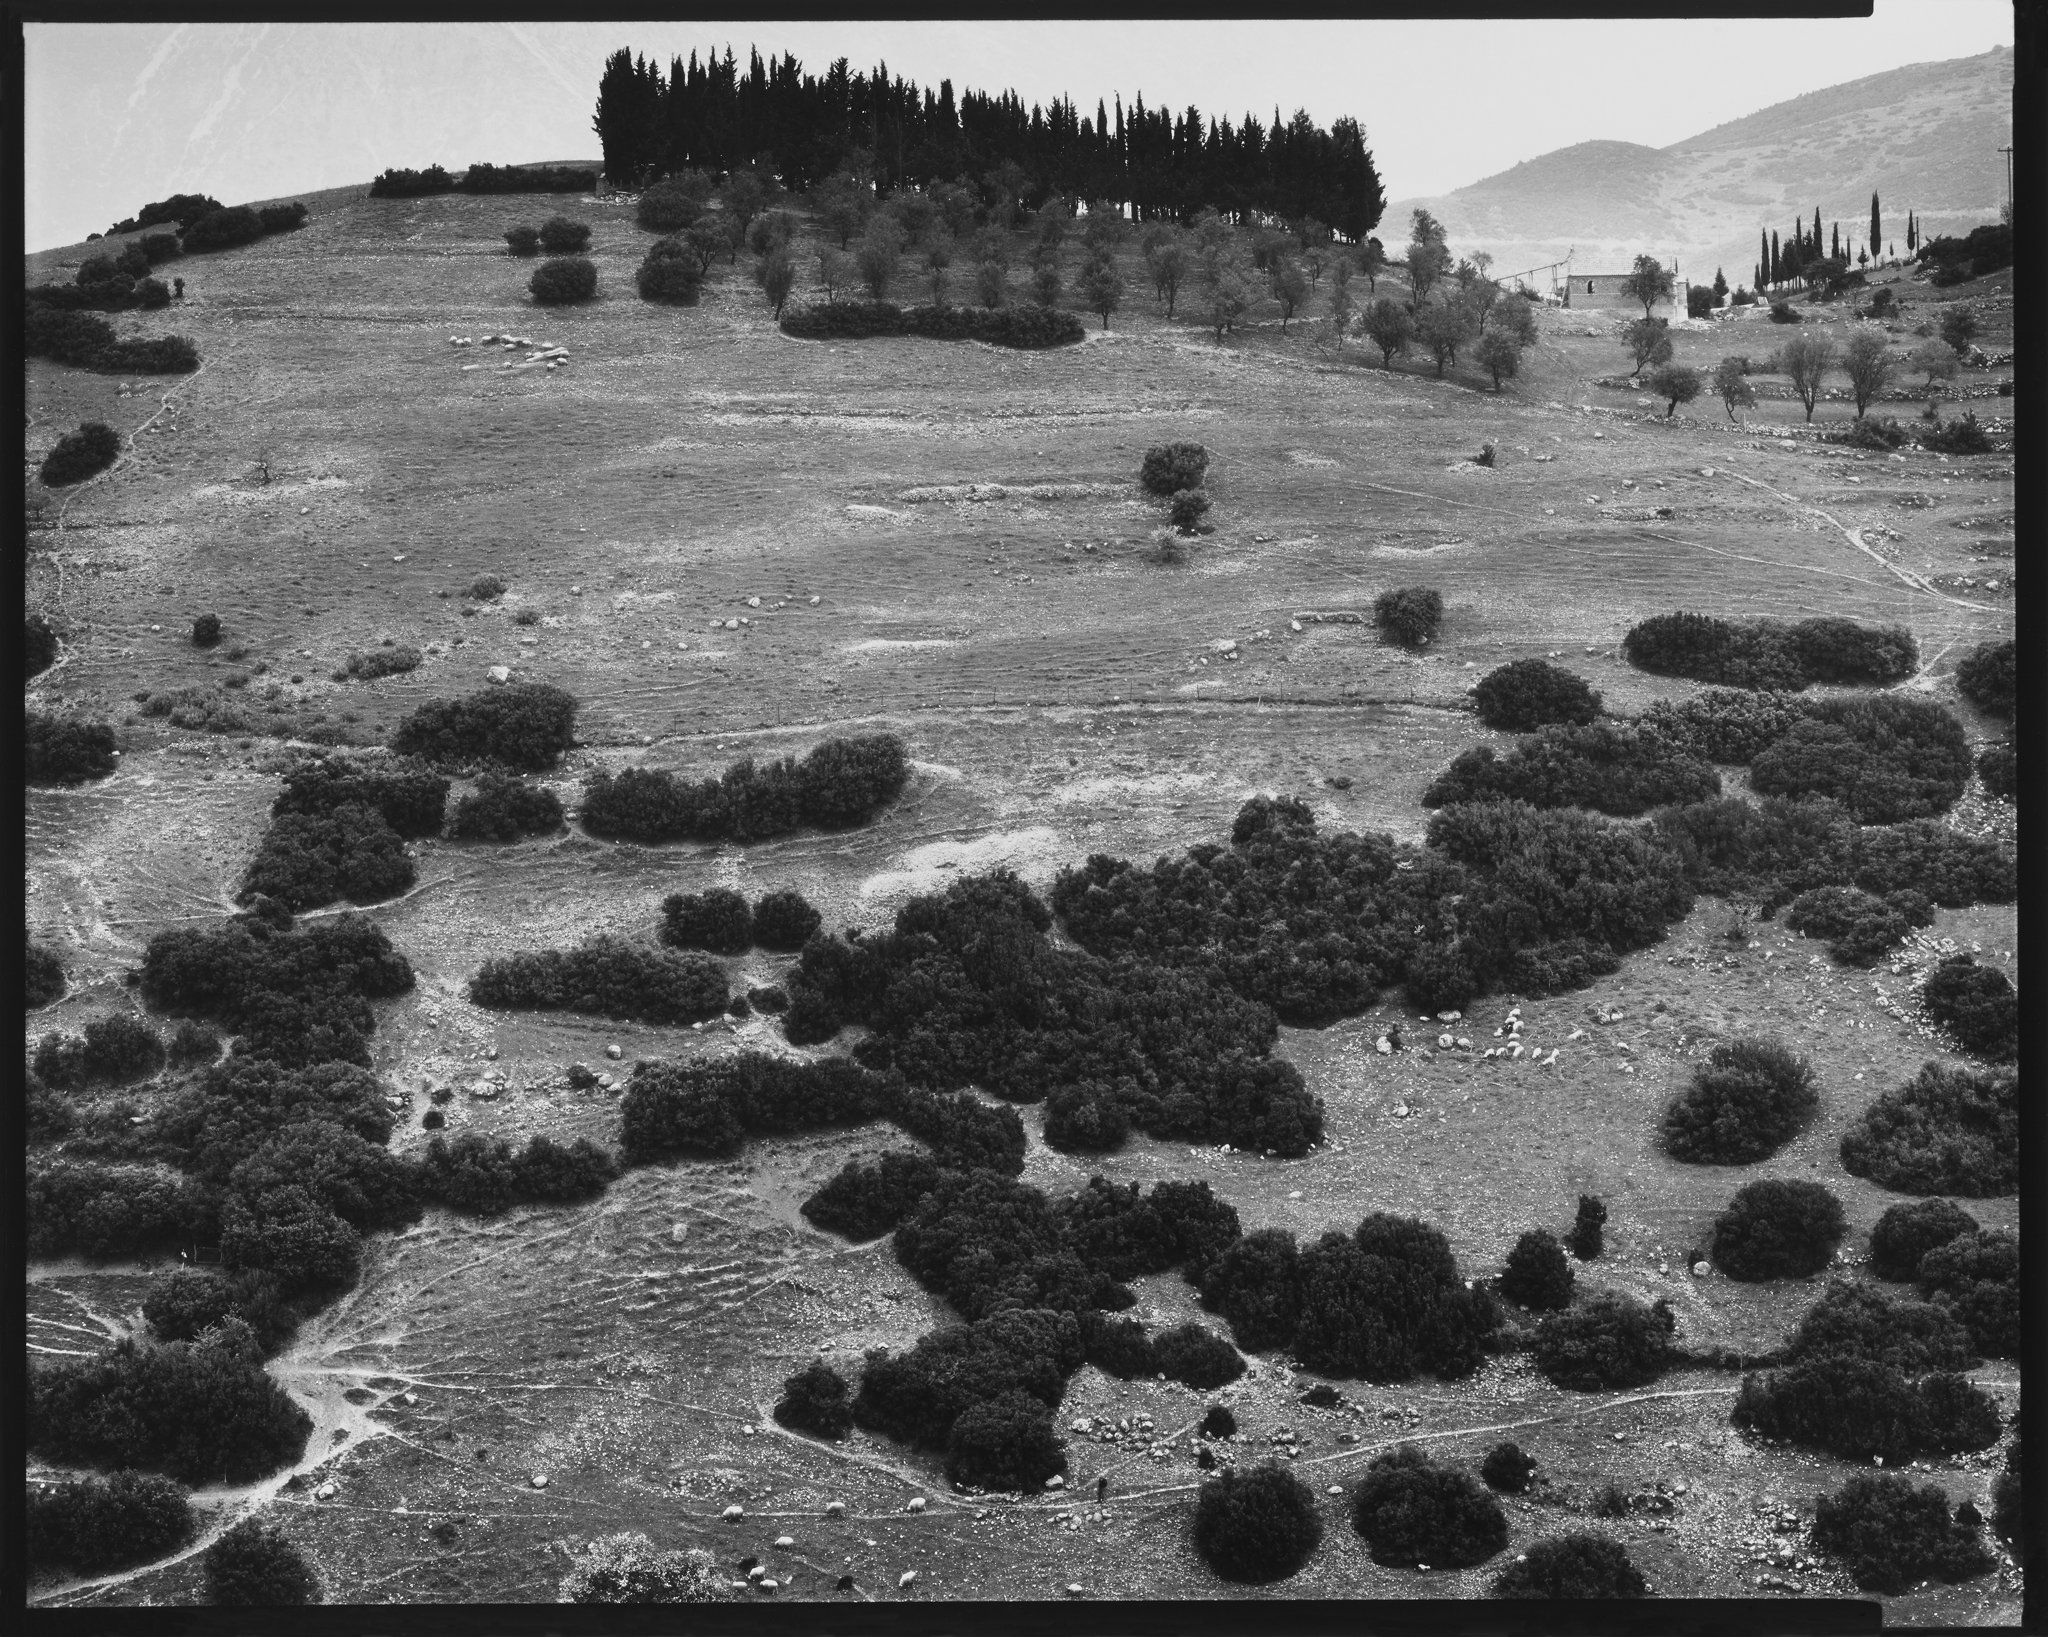 Greek Landscapes Portfolio_Landscape with Sheep, Lidoriki, Greece_1982 © Nick Merrick.jpg